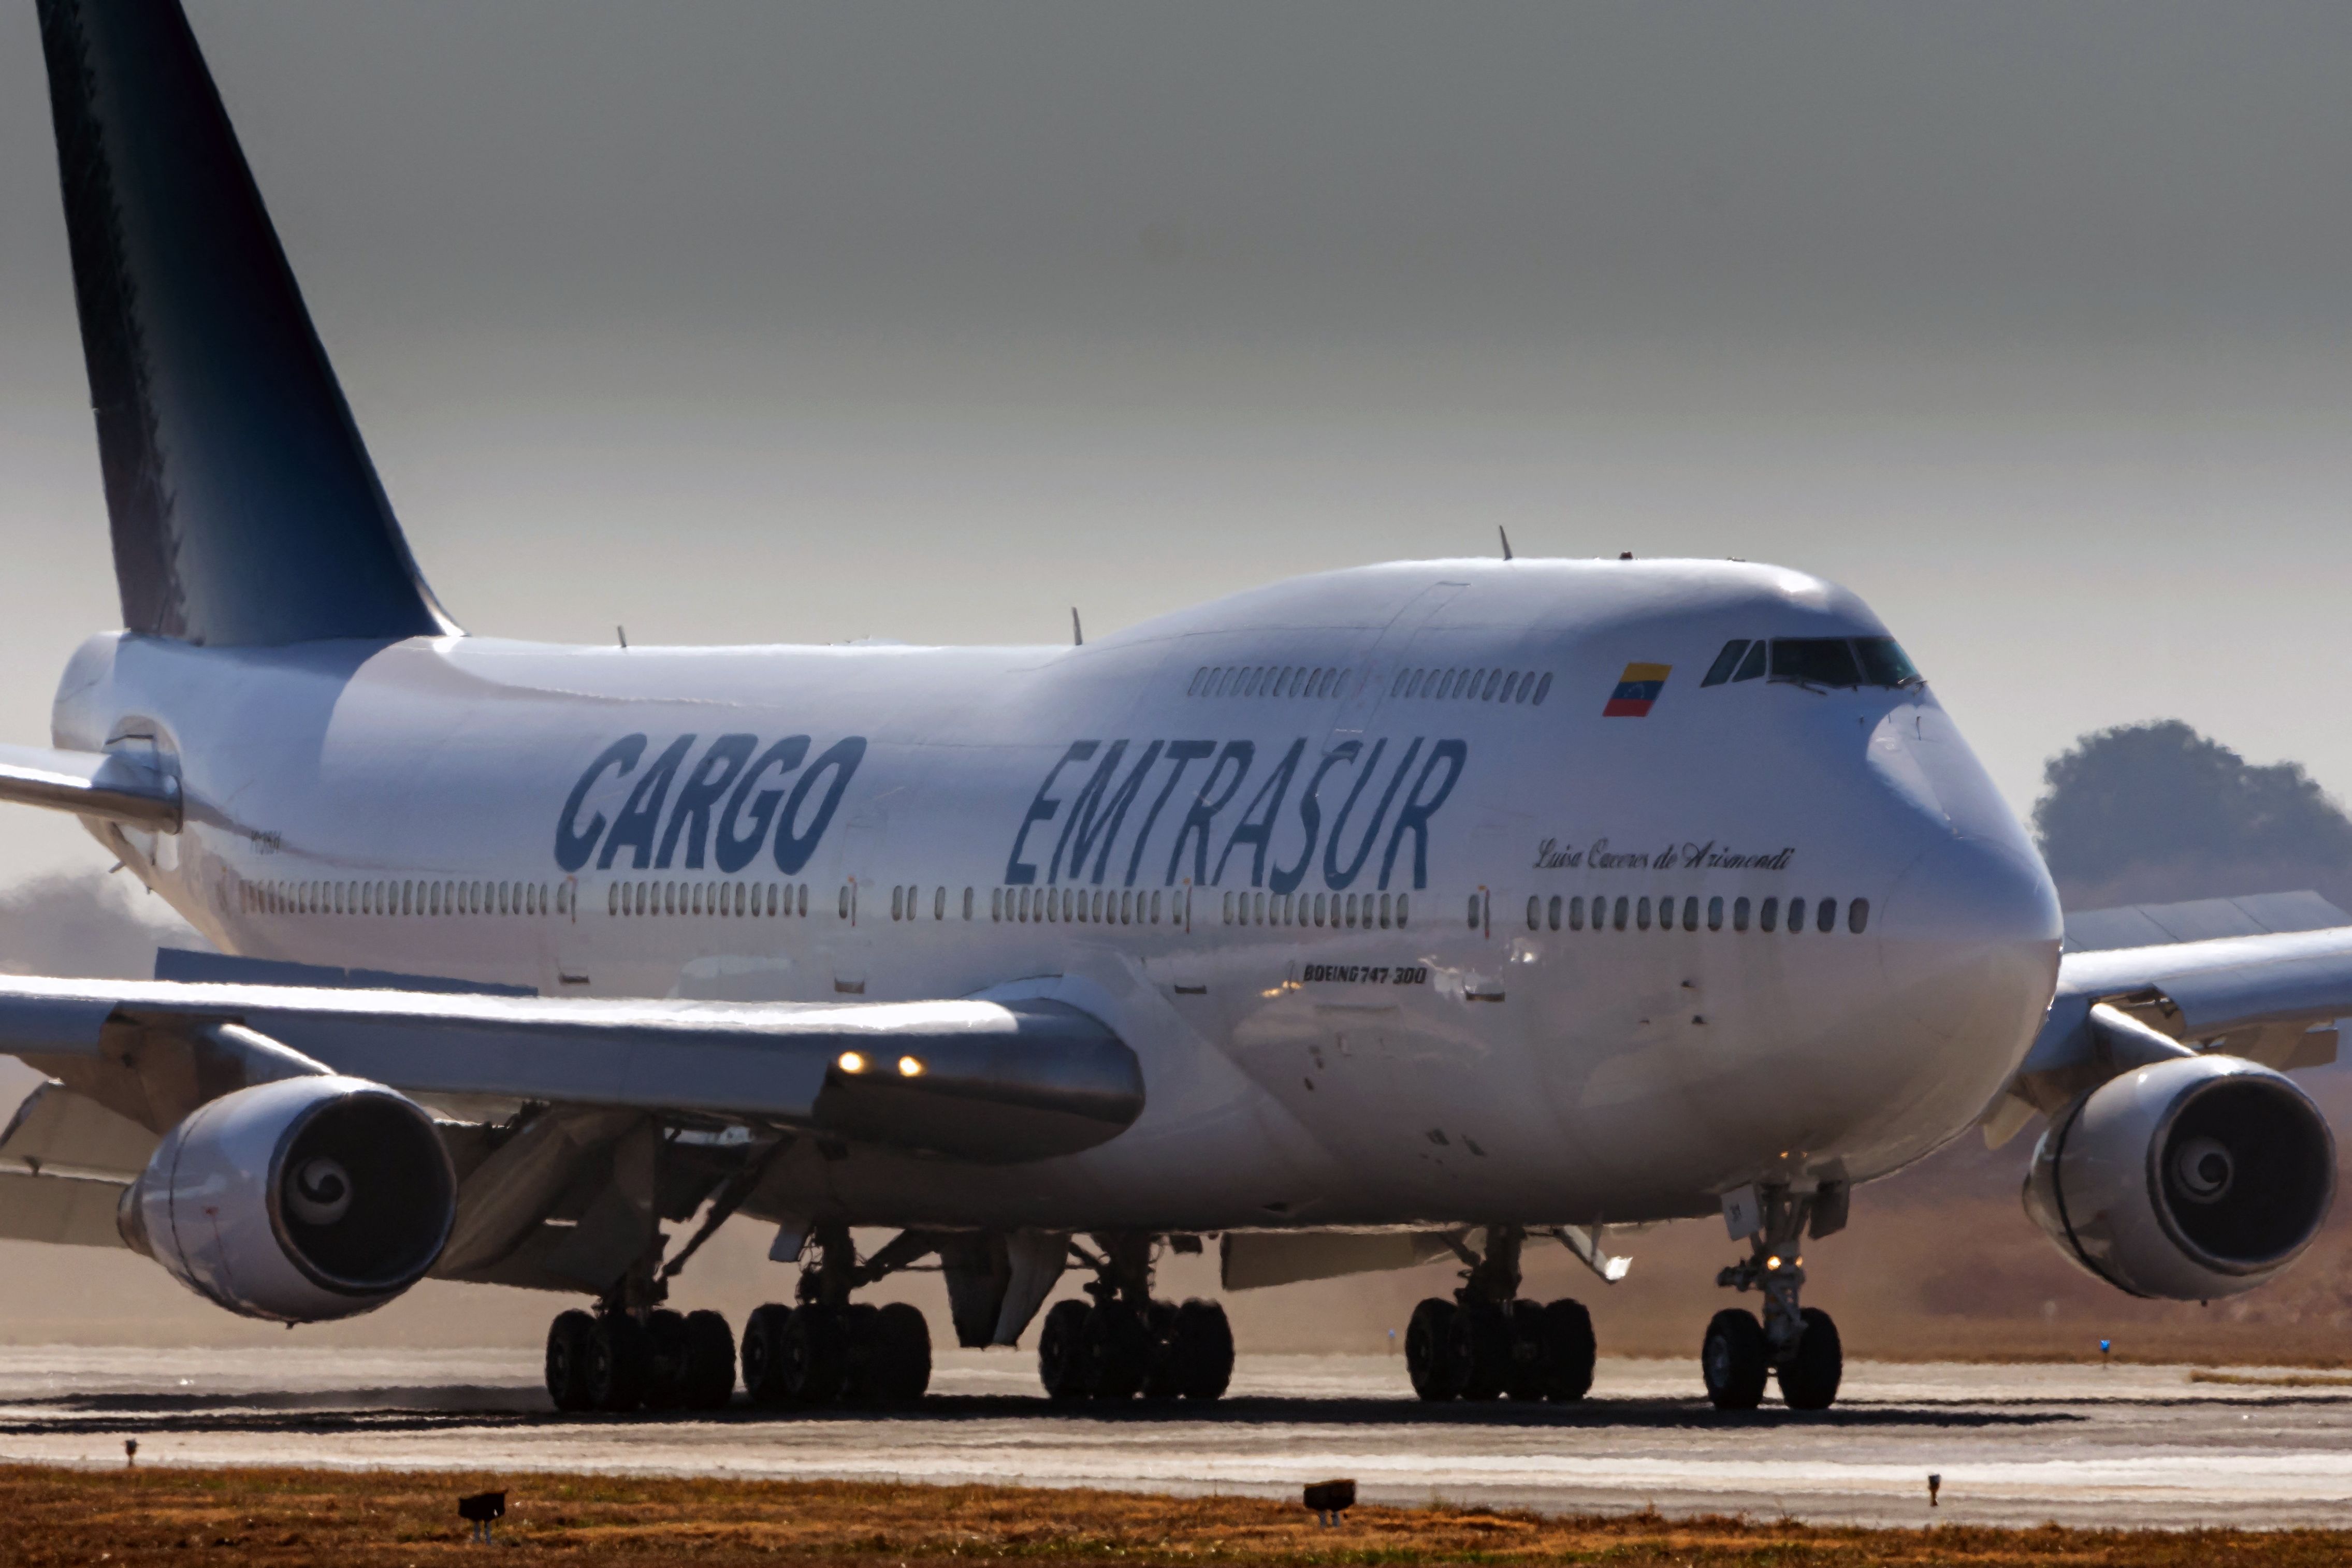 EMTRASUR Boeing 747-300 In Buenos Aires June 2022